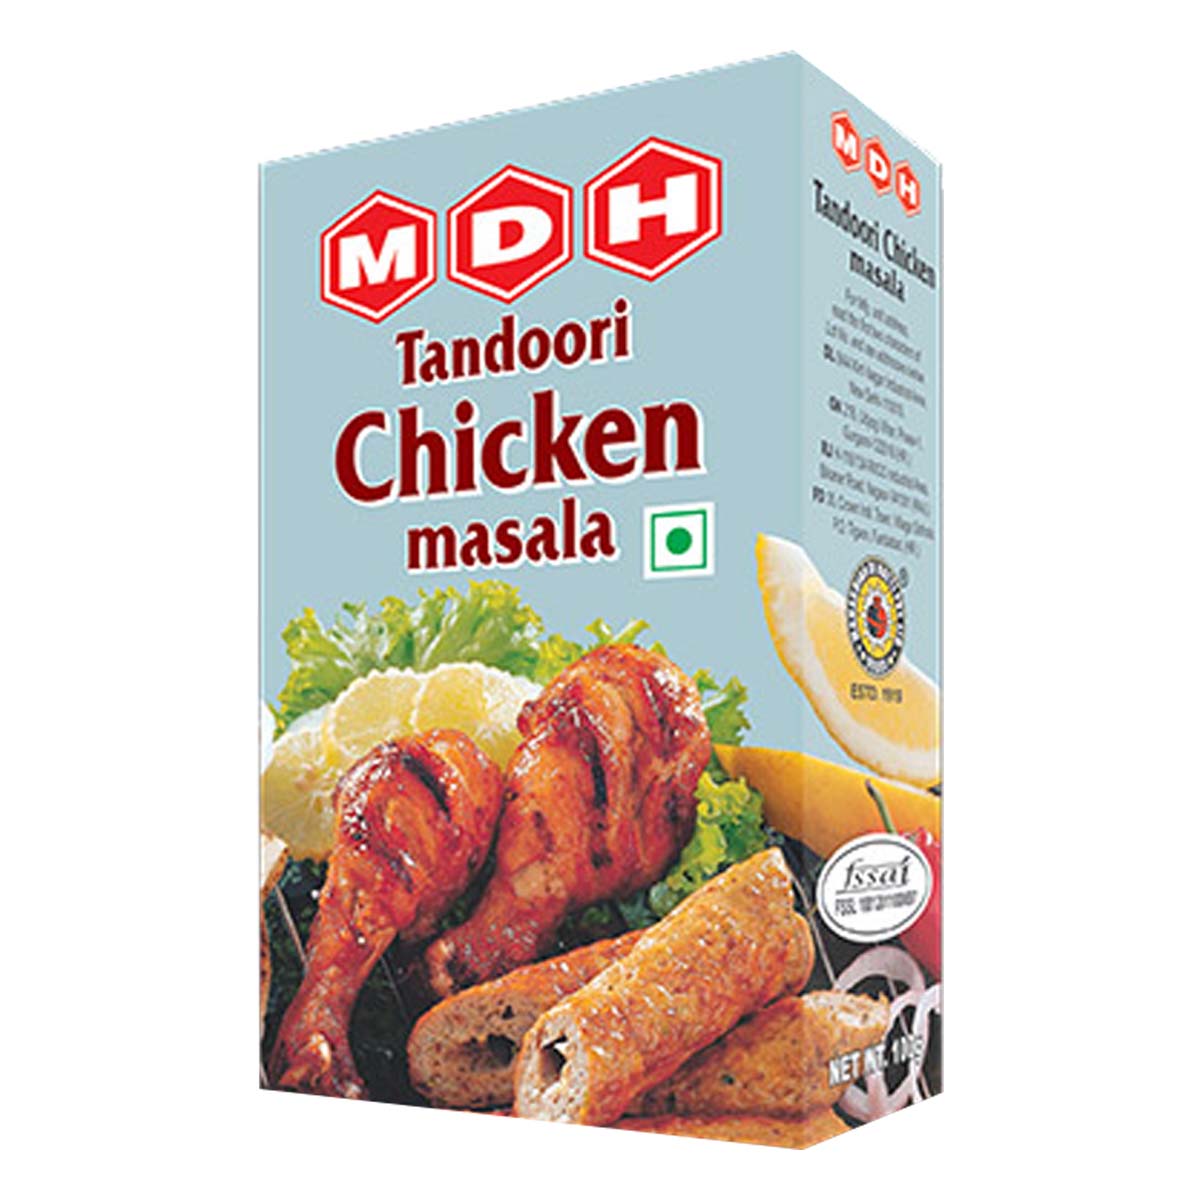 Buy MDH Tandoori Chicken Masala - 100 gm